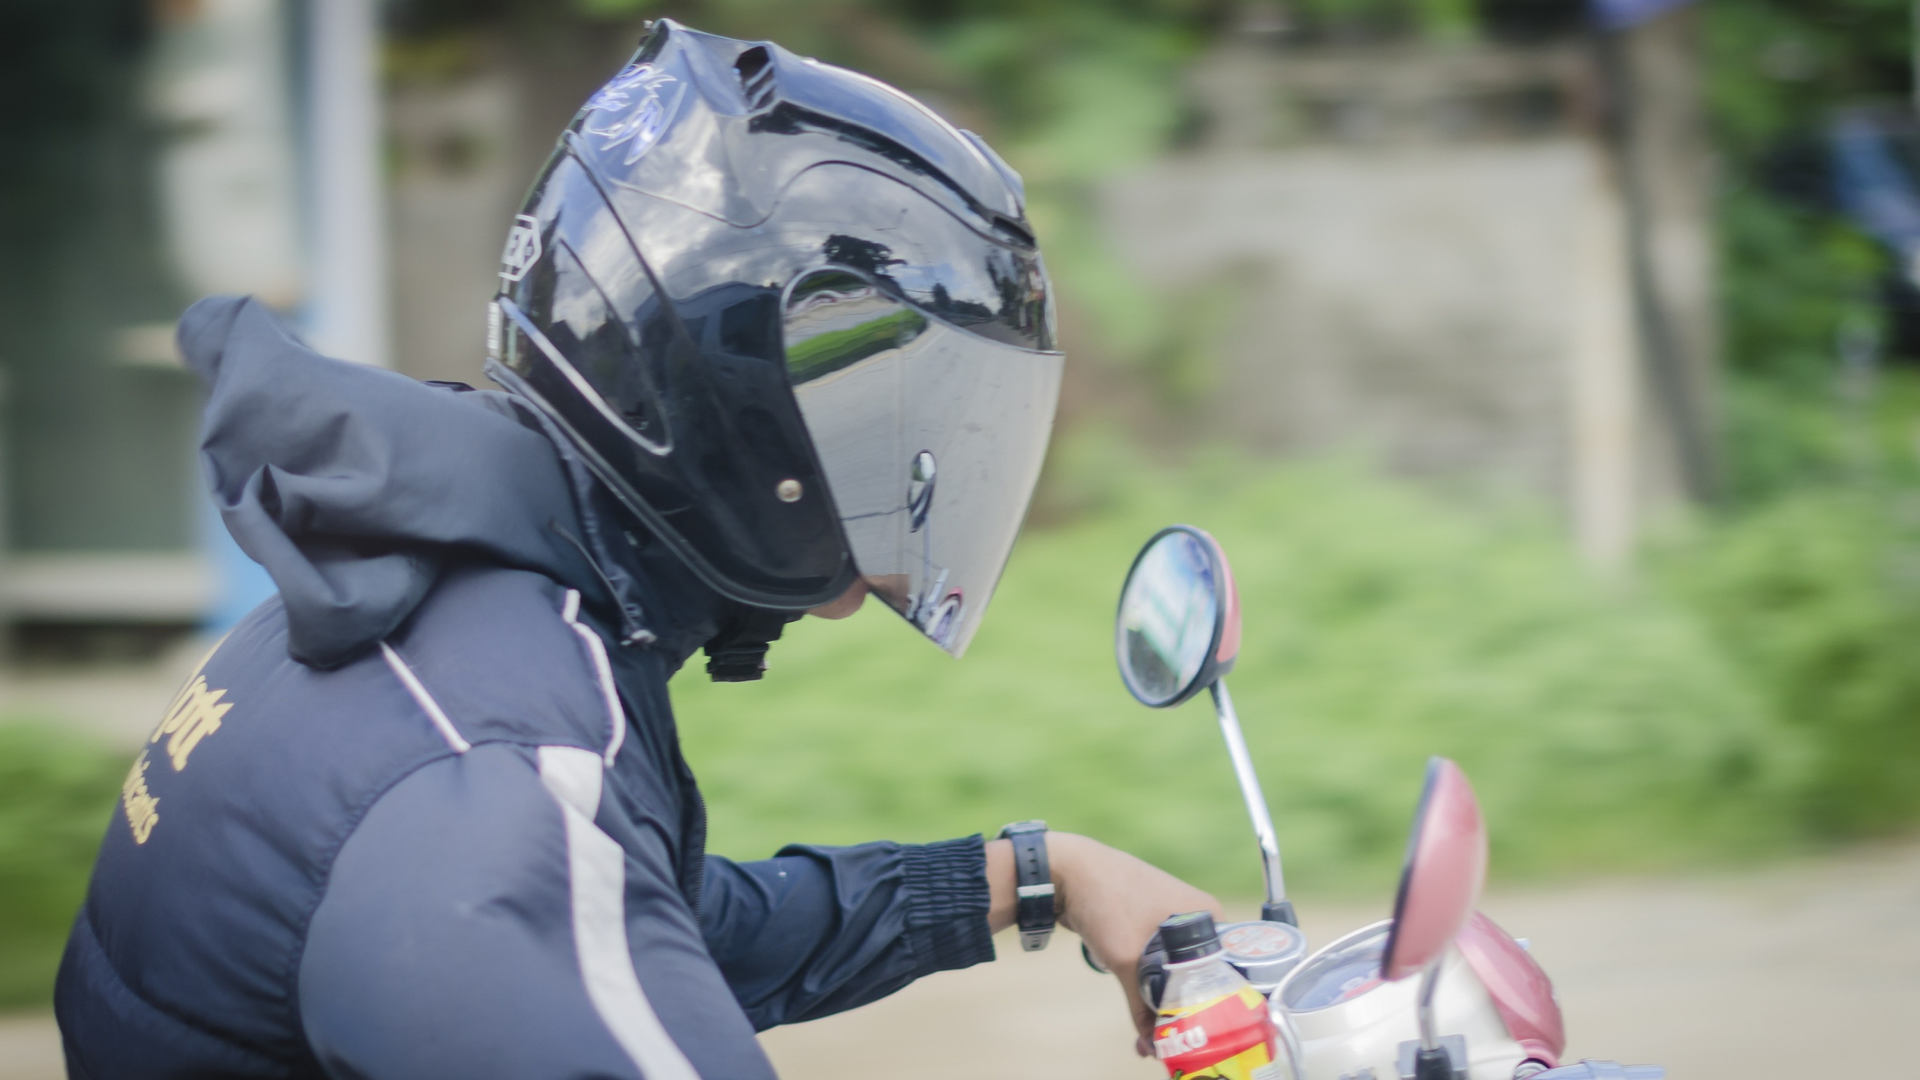 Capacetes podem gerar multas aos motociclistas